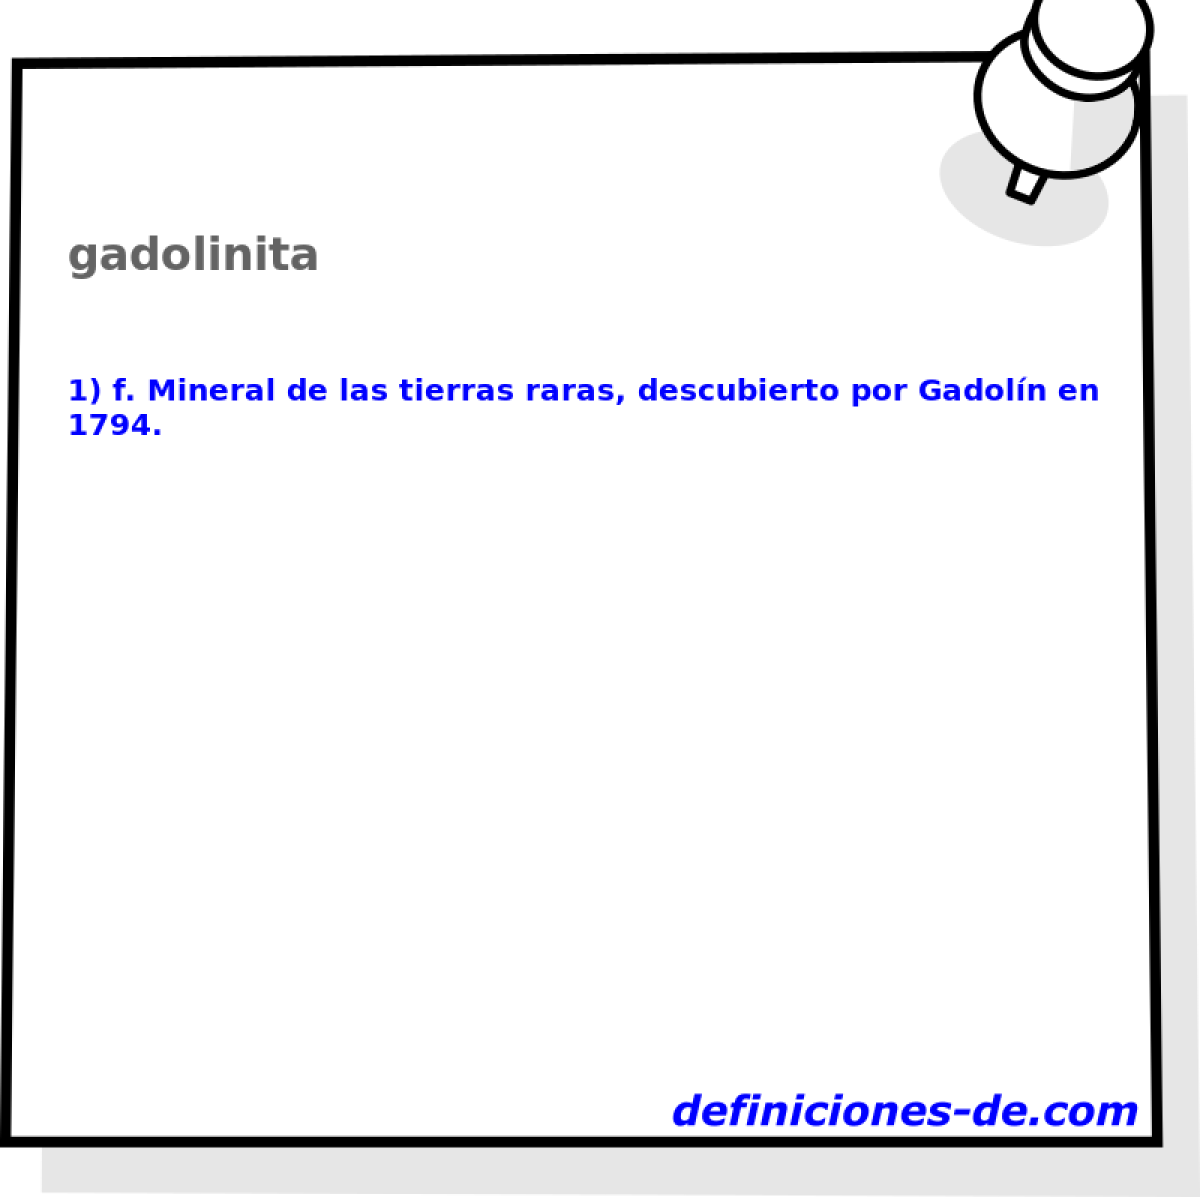 gadolinita 